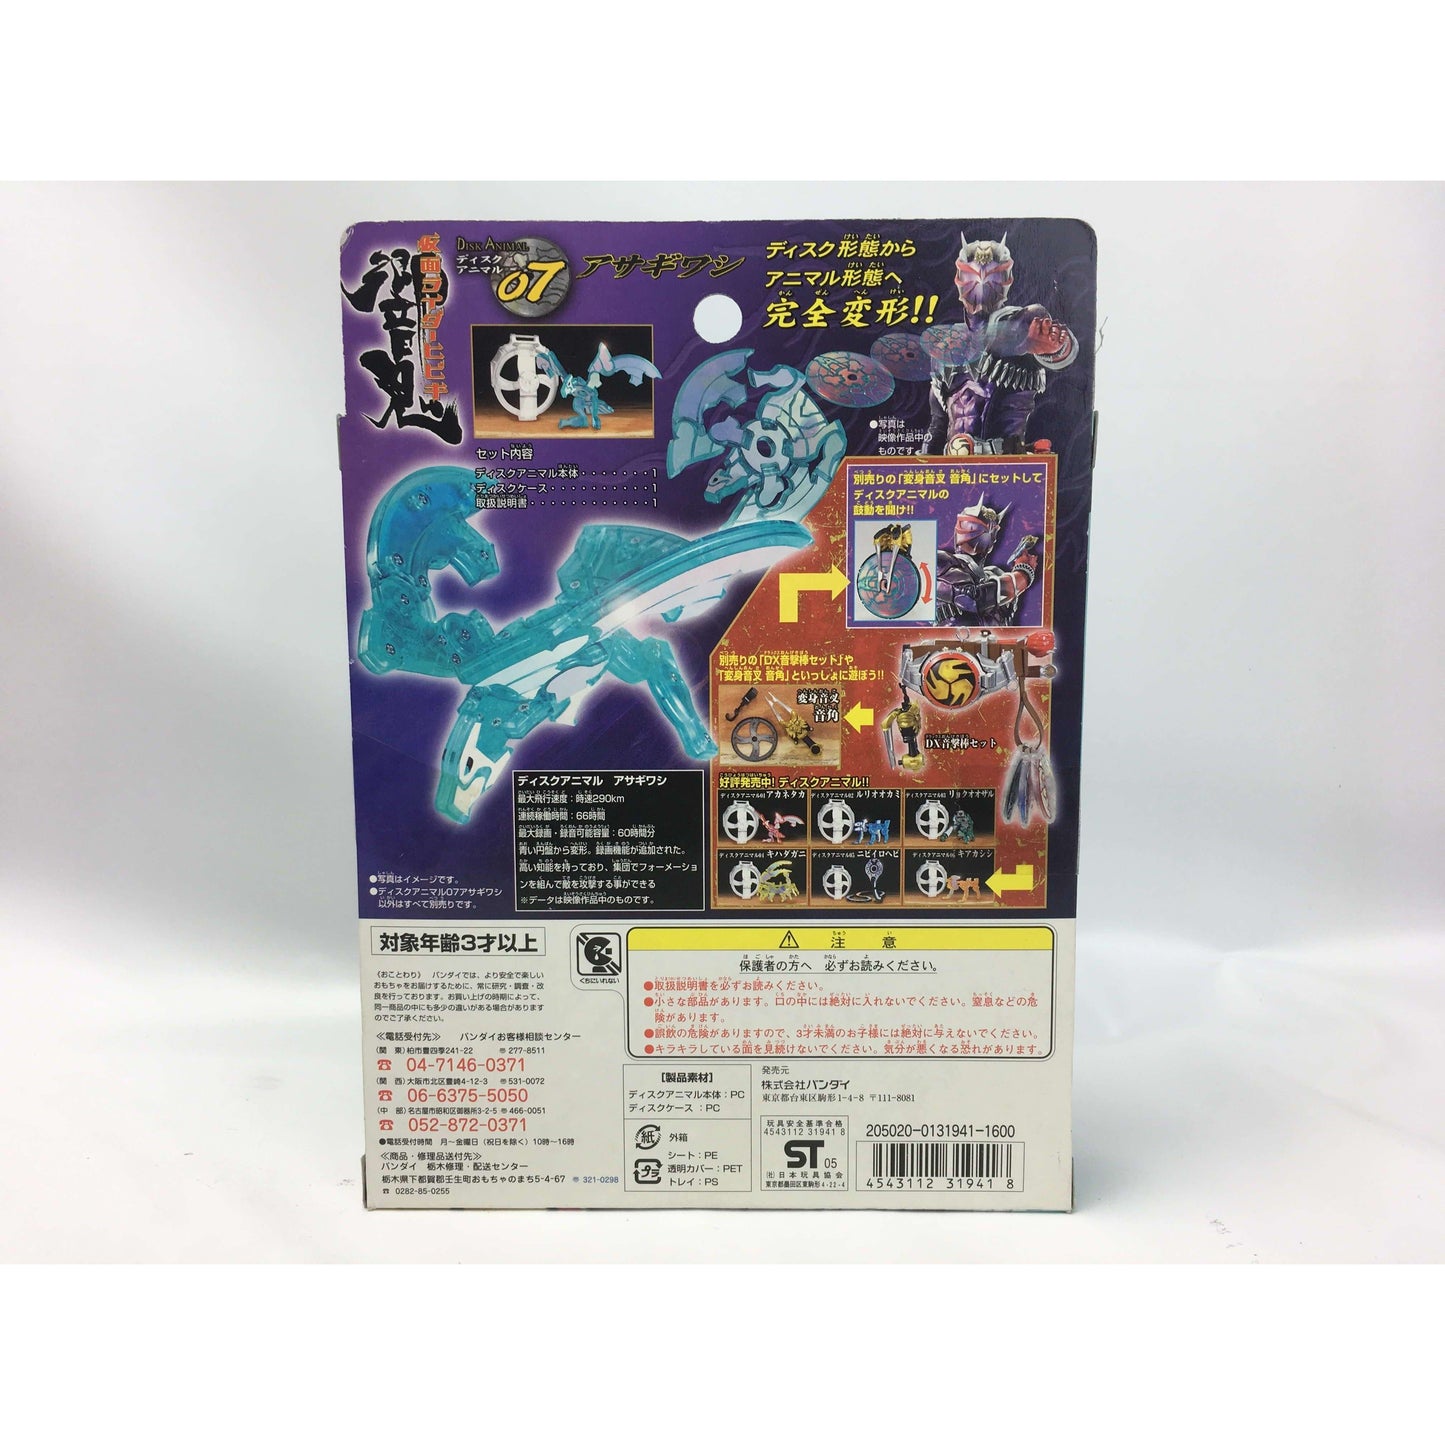 [BOXED] KR Hibiki: Disk Animal 07 Asagi Washi | CSTOYS INTERNATIONAL